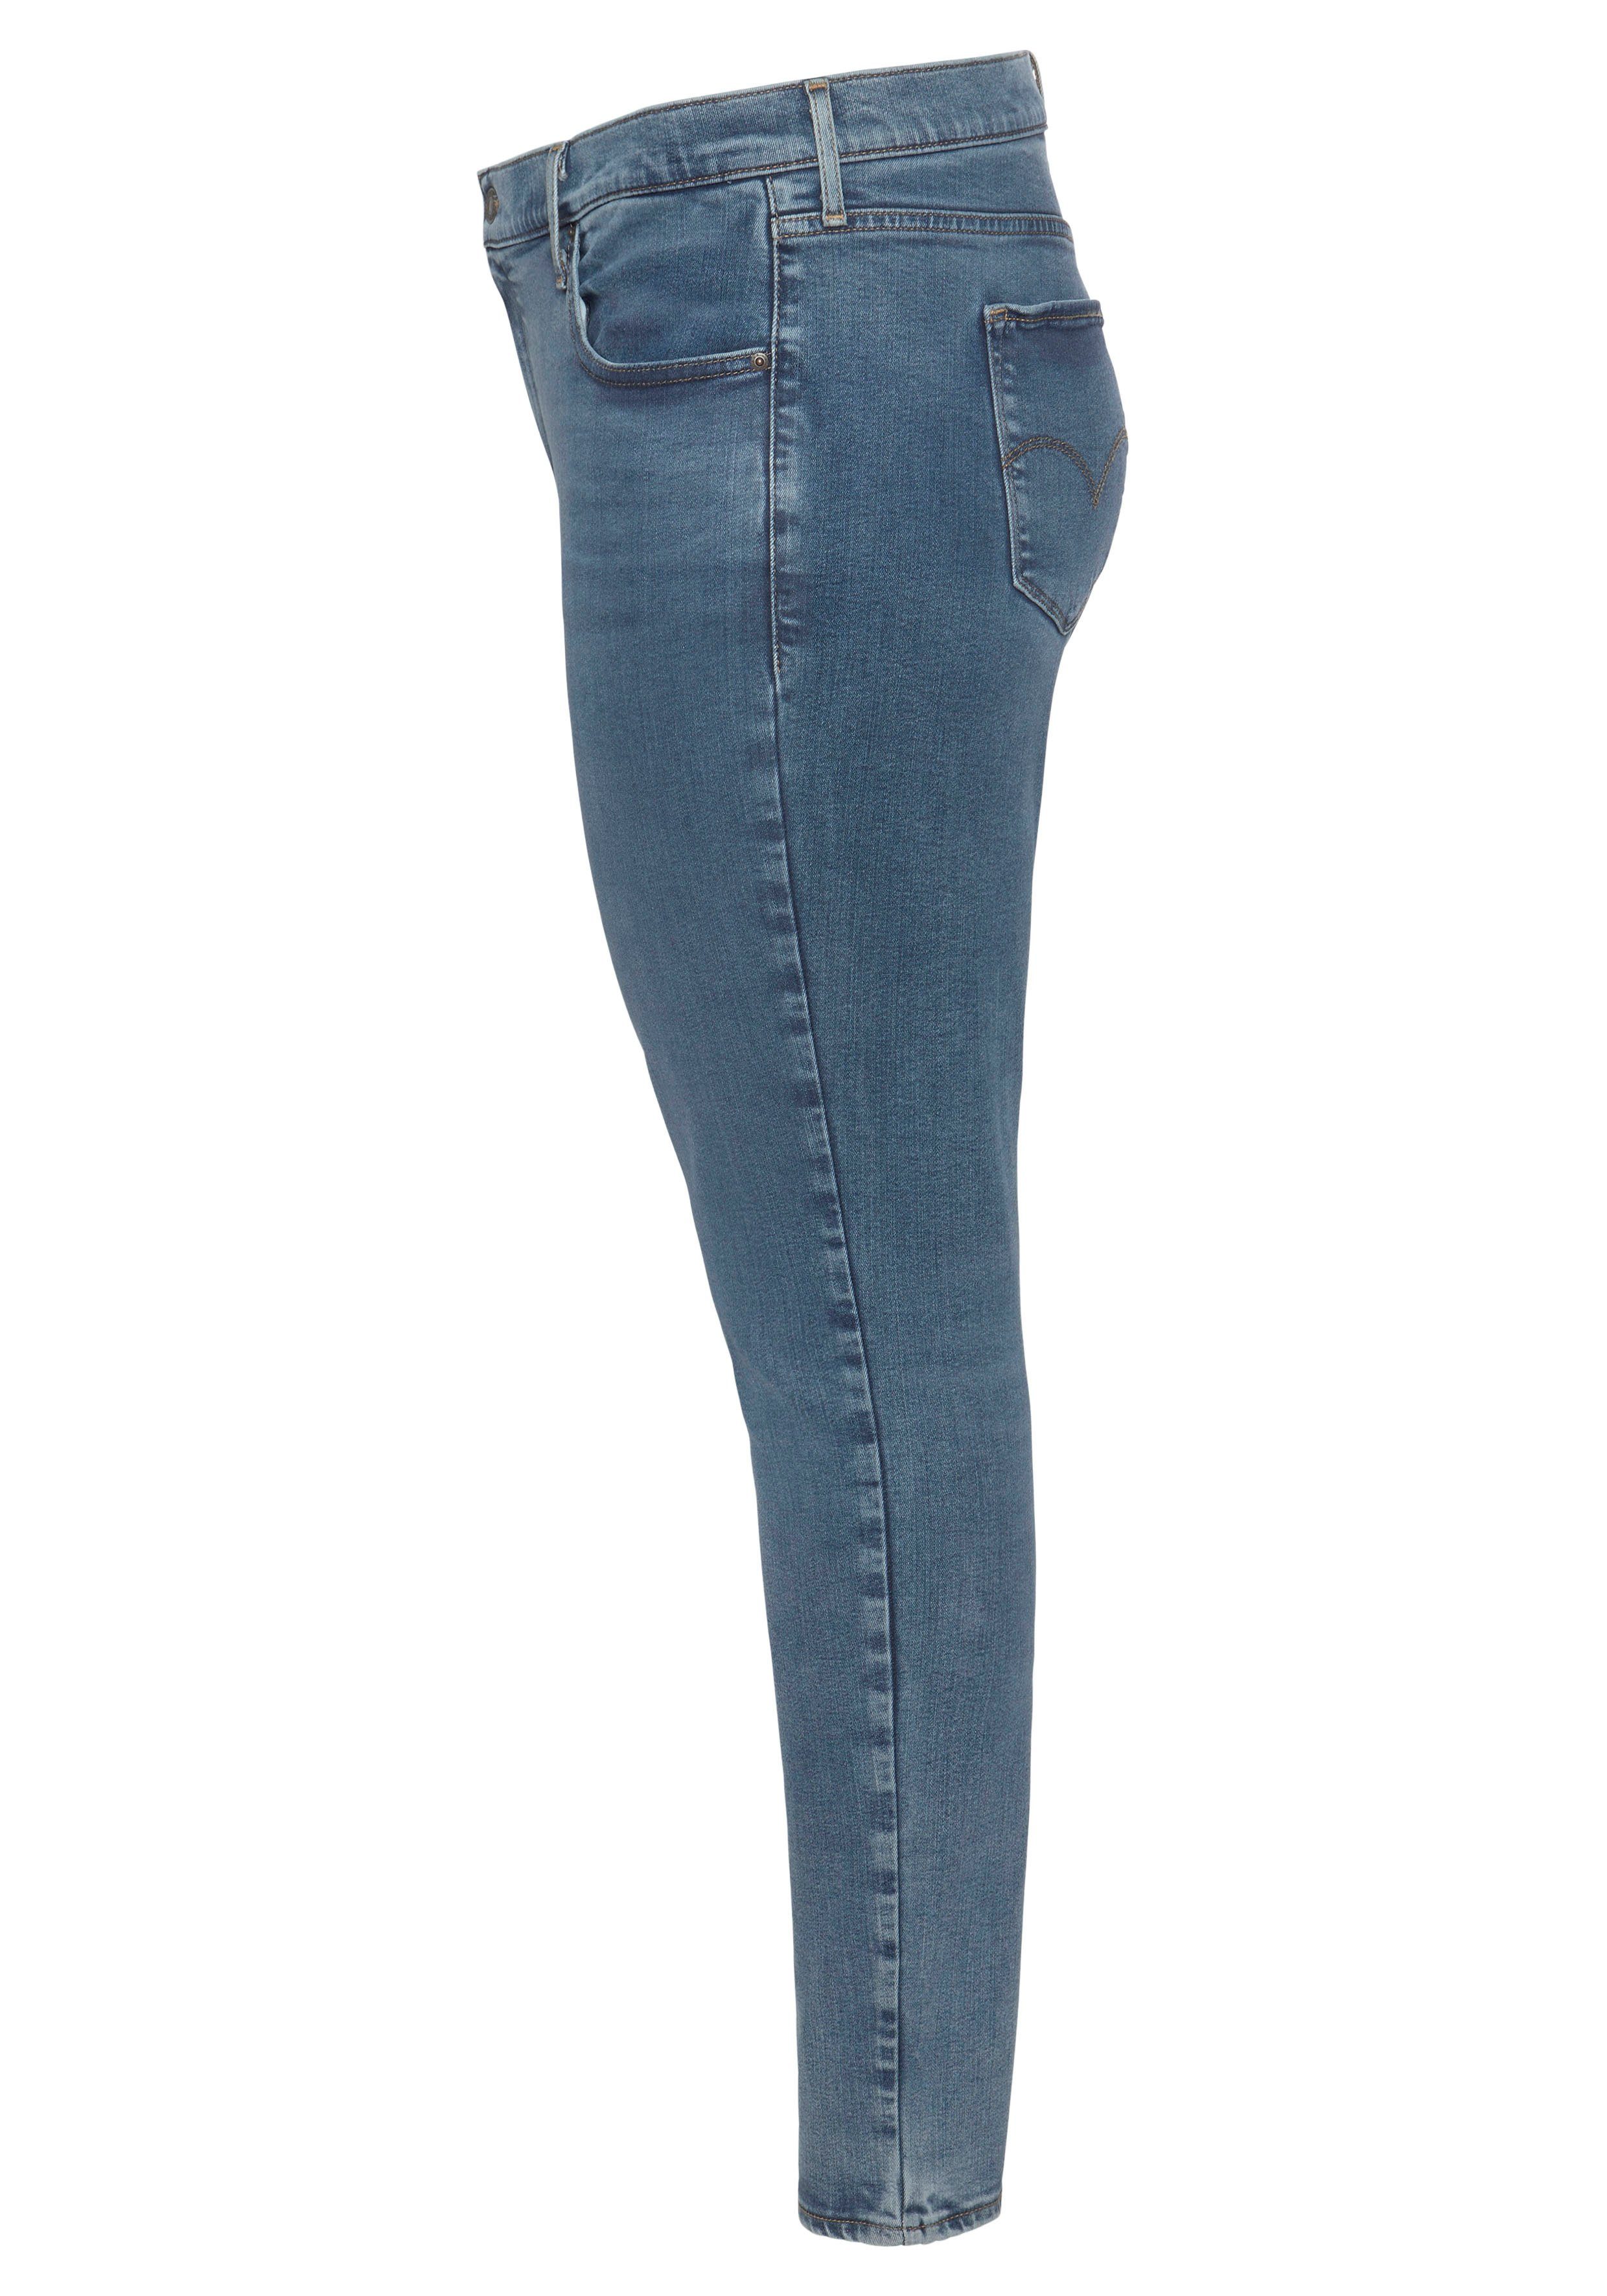 Plus Schnitt PL HI 721 RISE Skinny-fit-Jeans figurbetonter Levi's® mid-blue-used SKINNY sehr